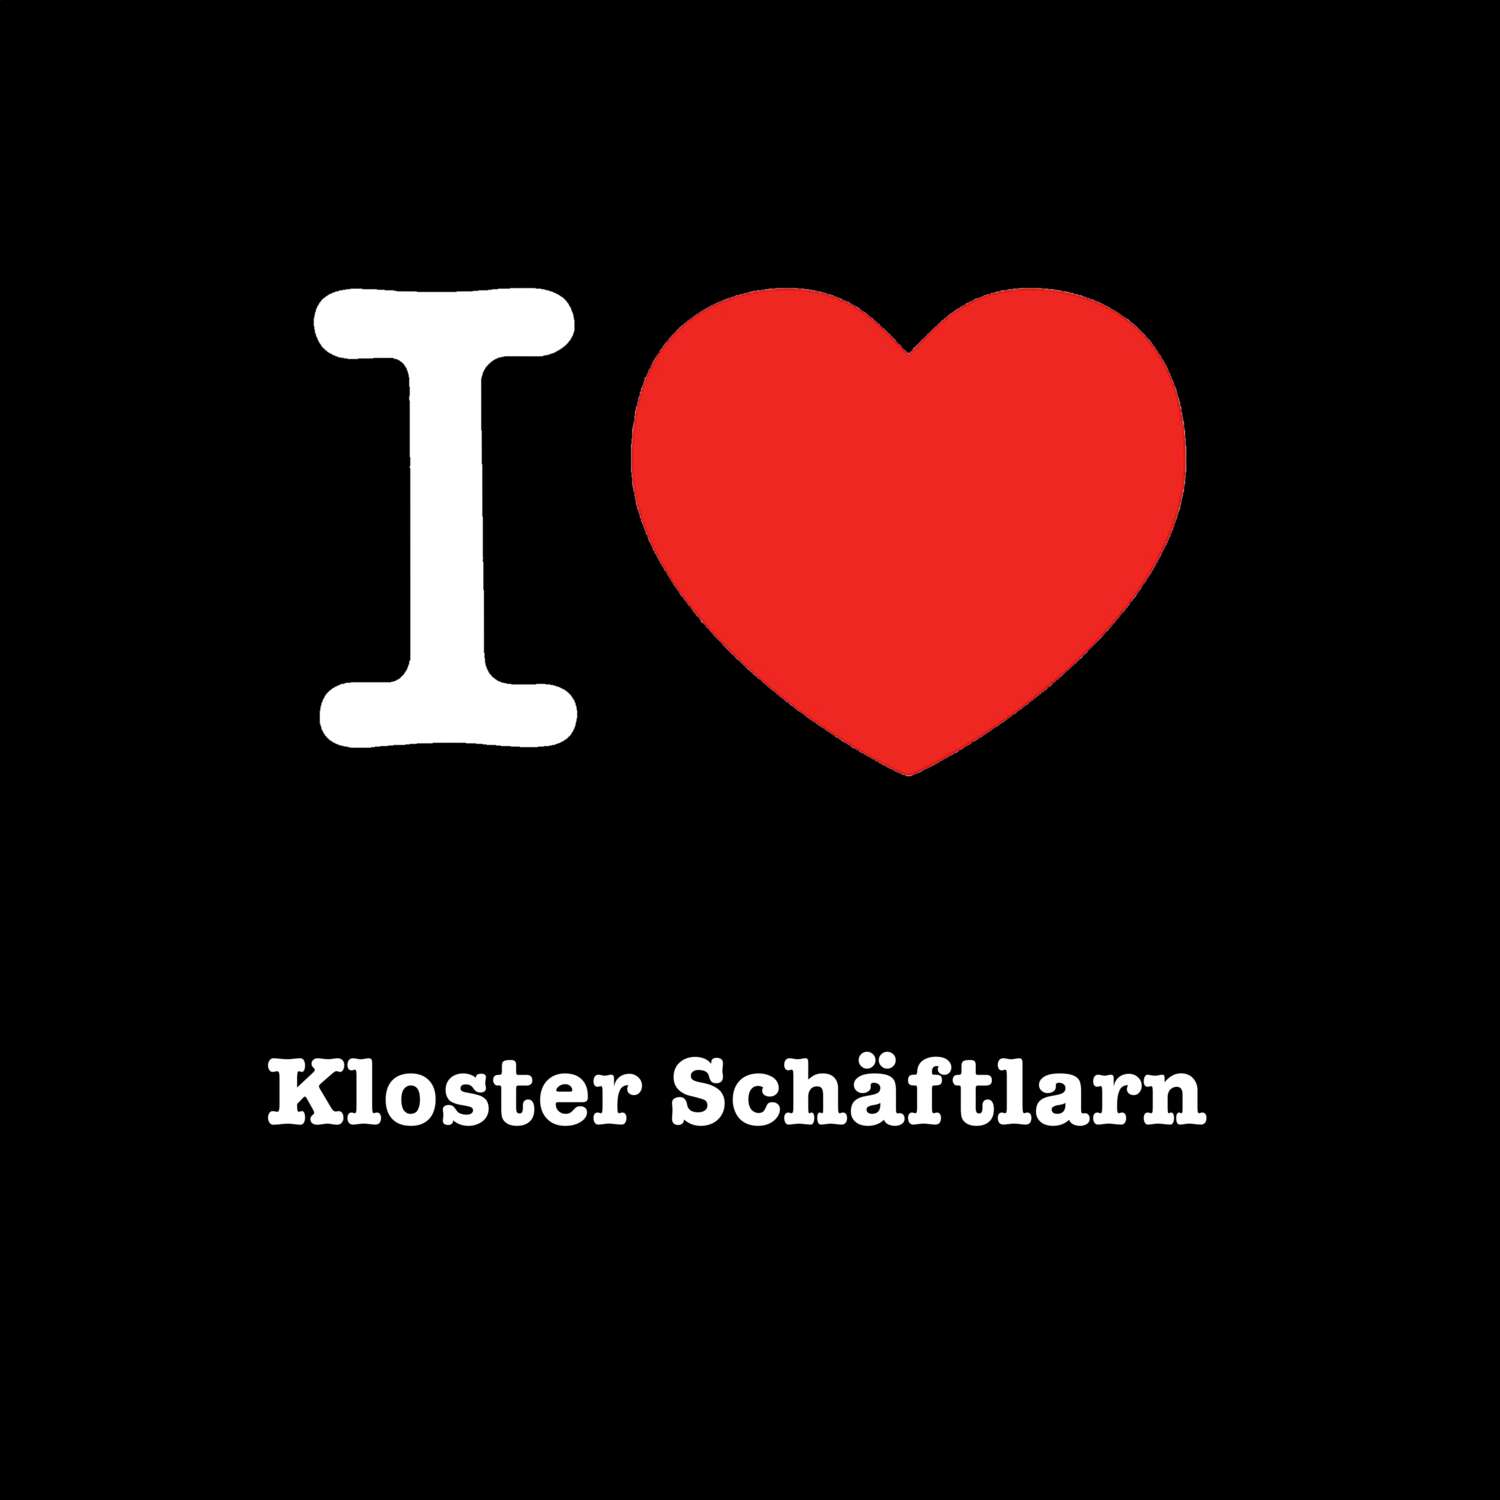 Kloster Schäftlarn T-Shirt »I love«